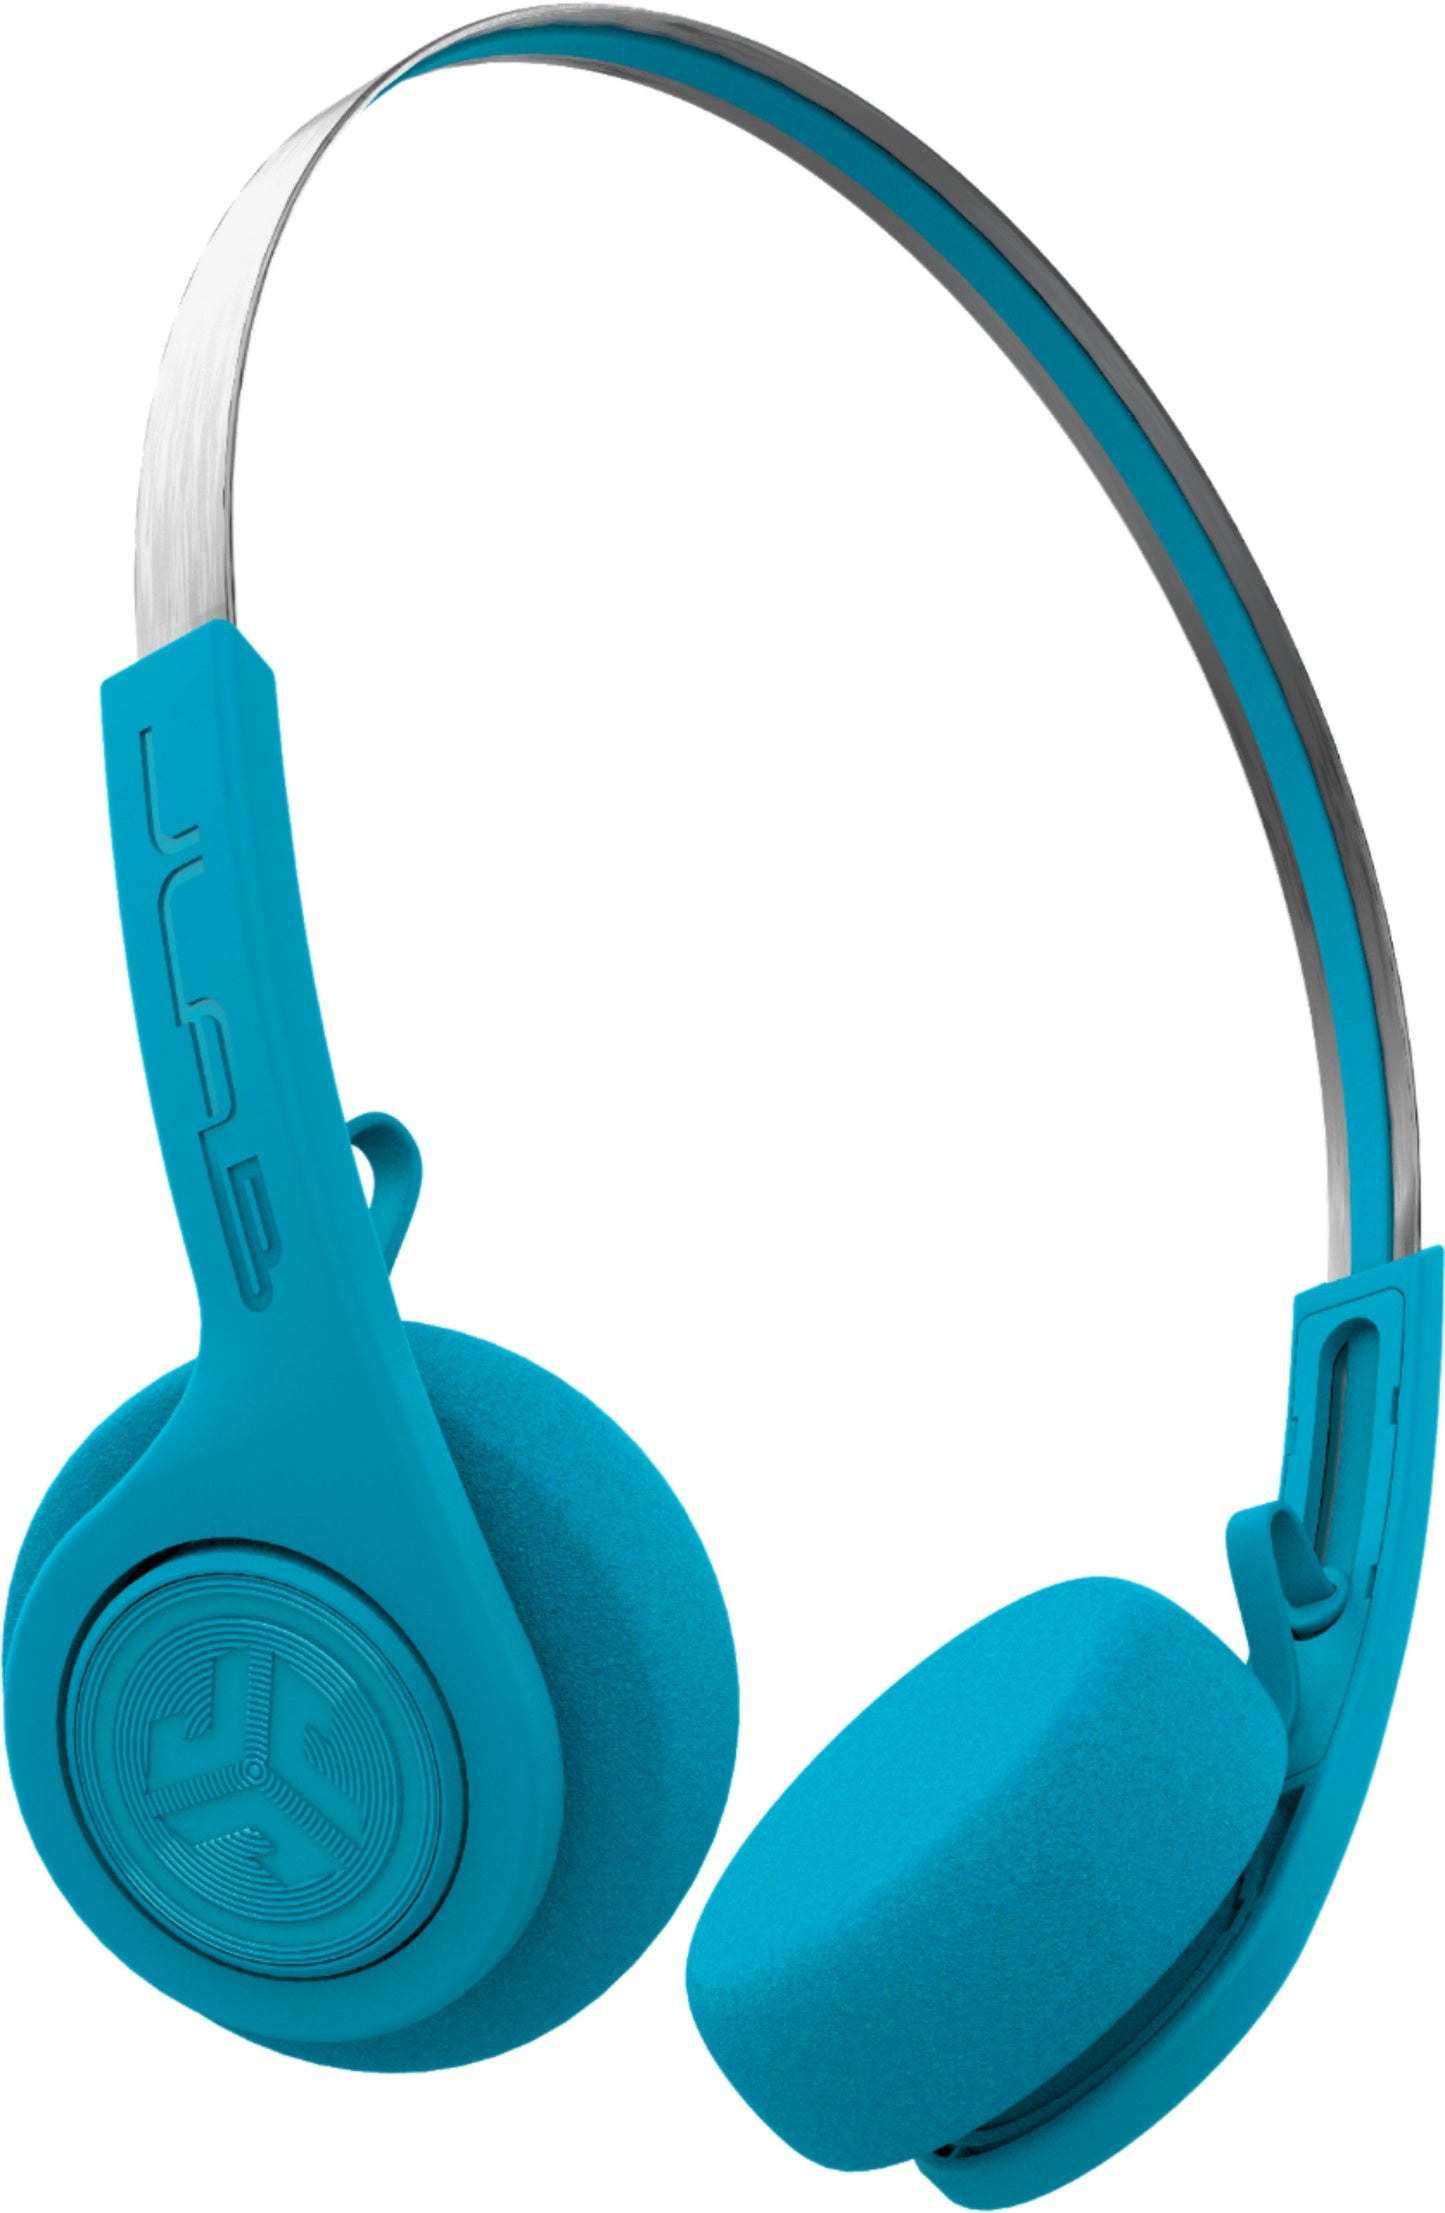 JLab Audio Rewind Wireless Retro Headphones - Blue